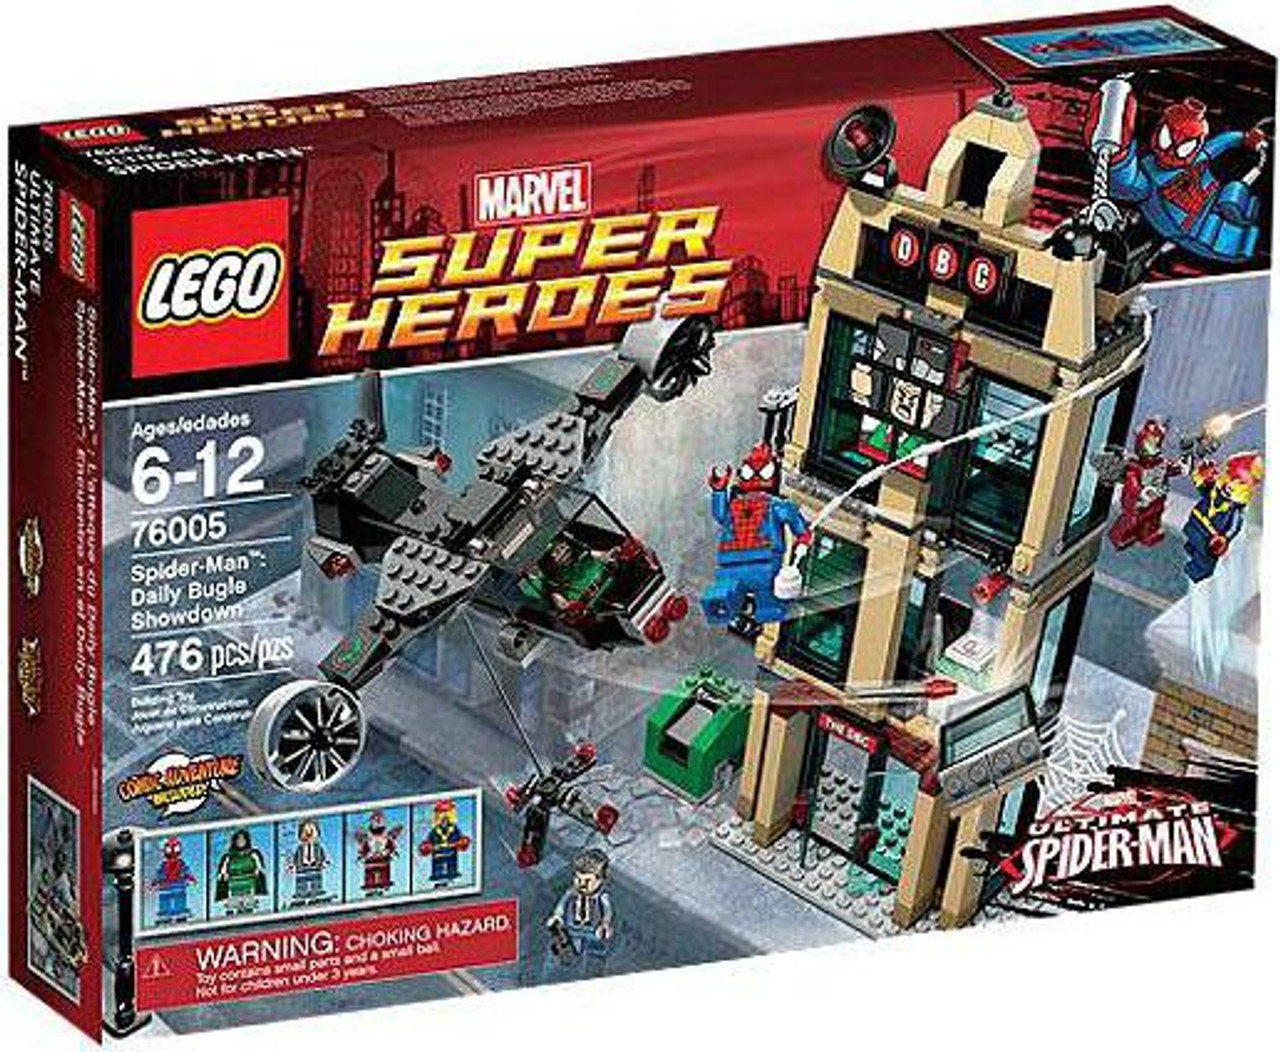 LEGO Marvel Super Heroes Ultimate Spider-Man Daily Bugle Showdown Set 76005 - ToyWiz